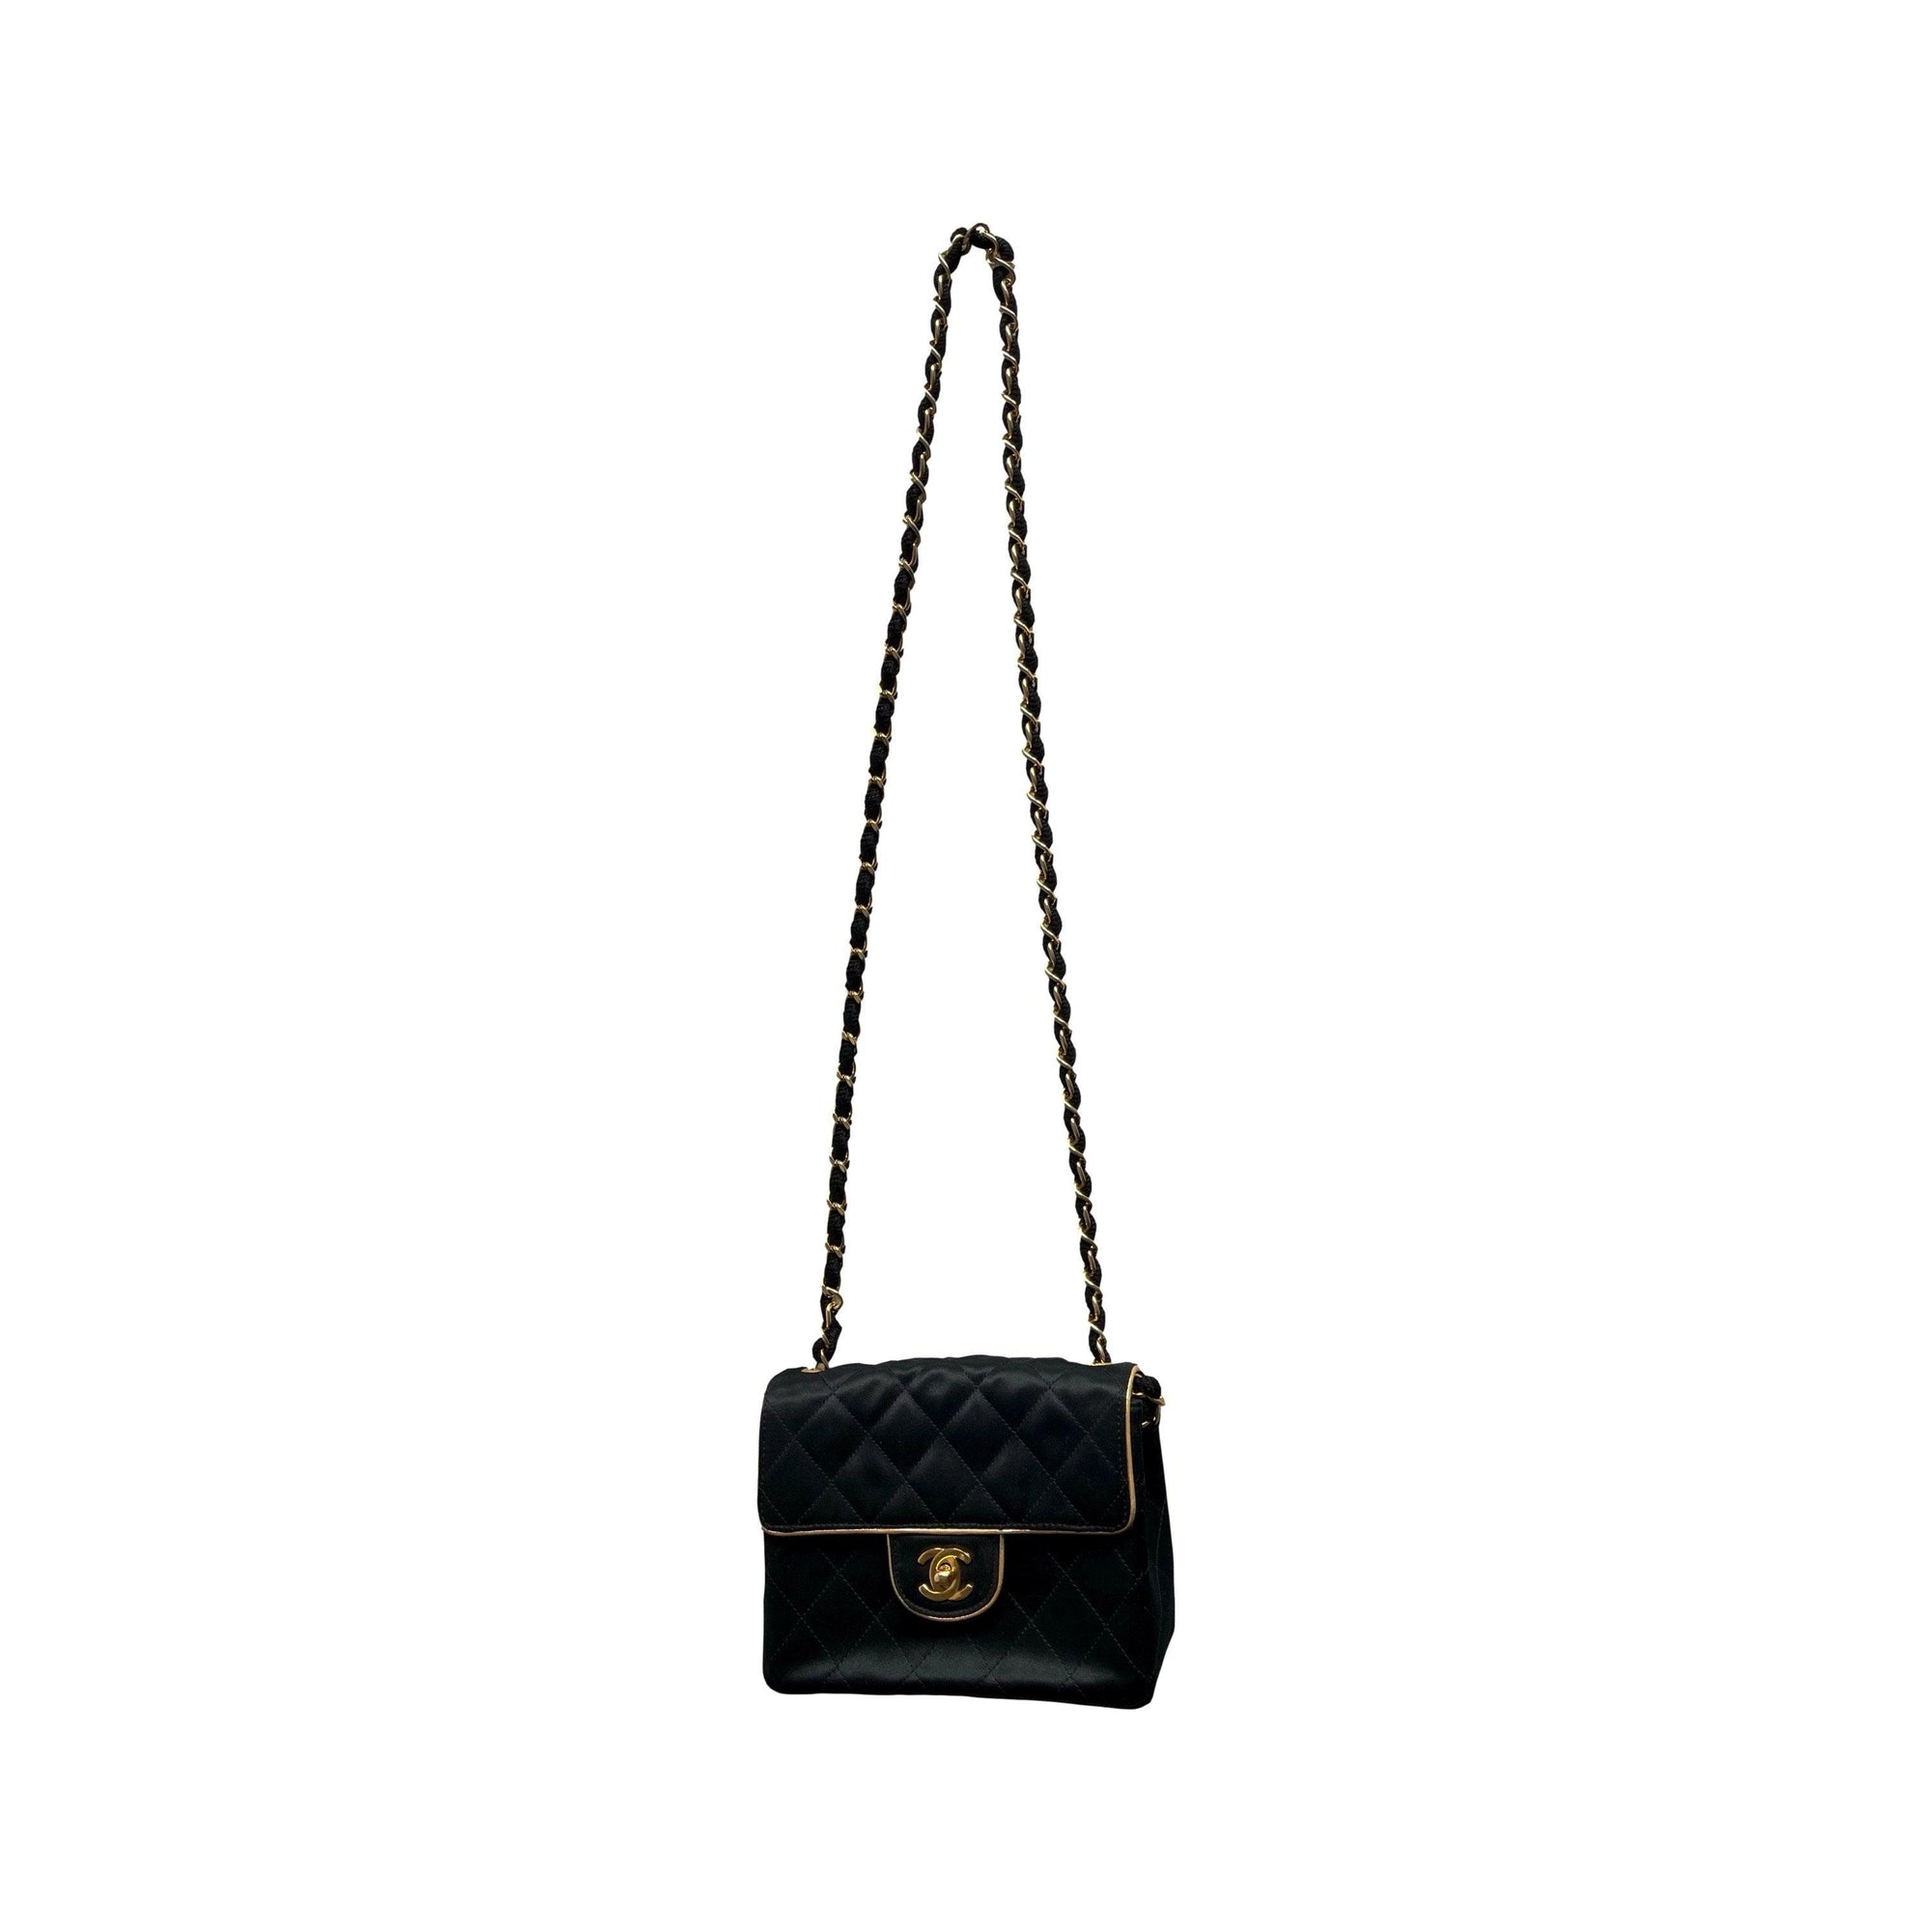 Chanel Black Satin Flap Bag - Handbags